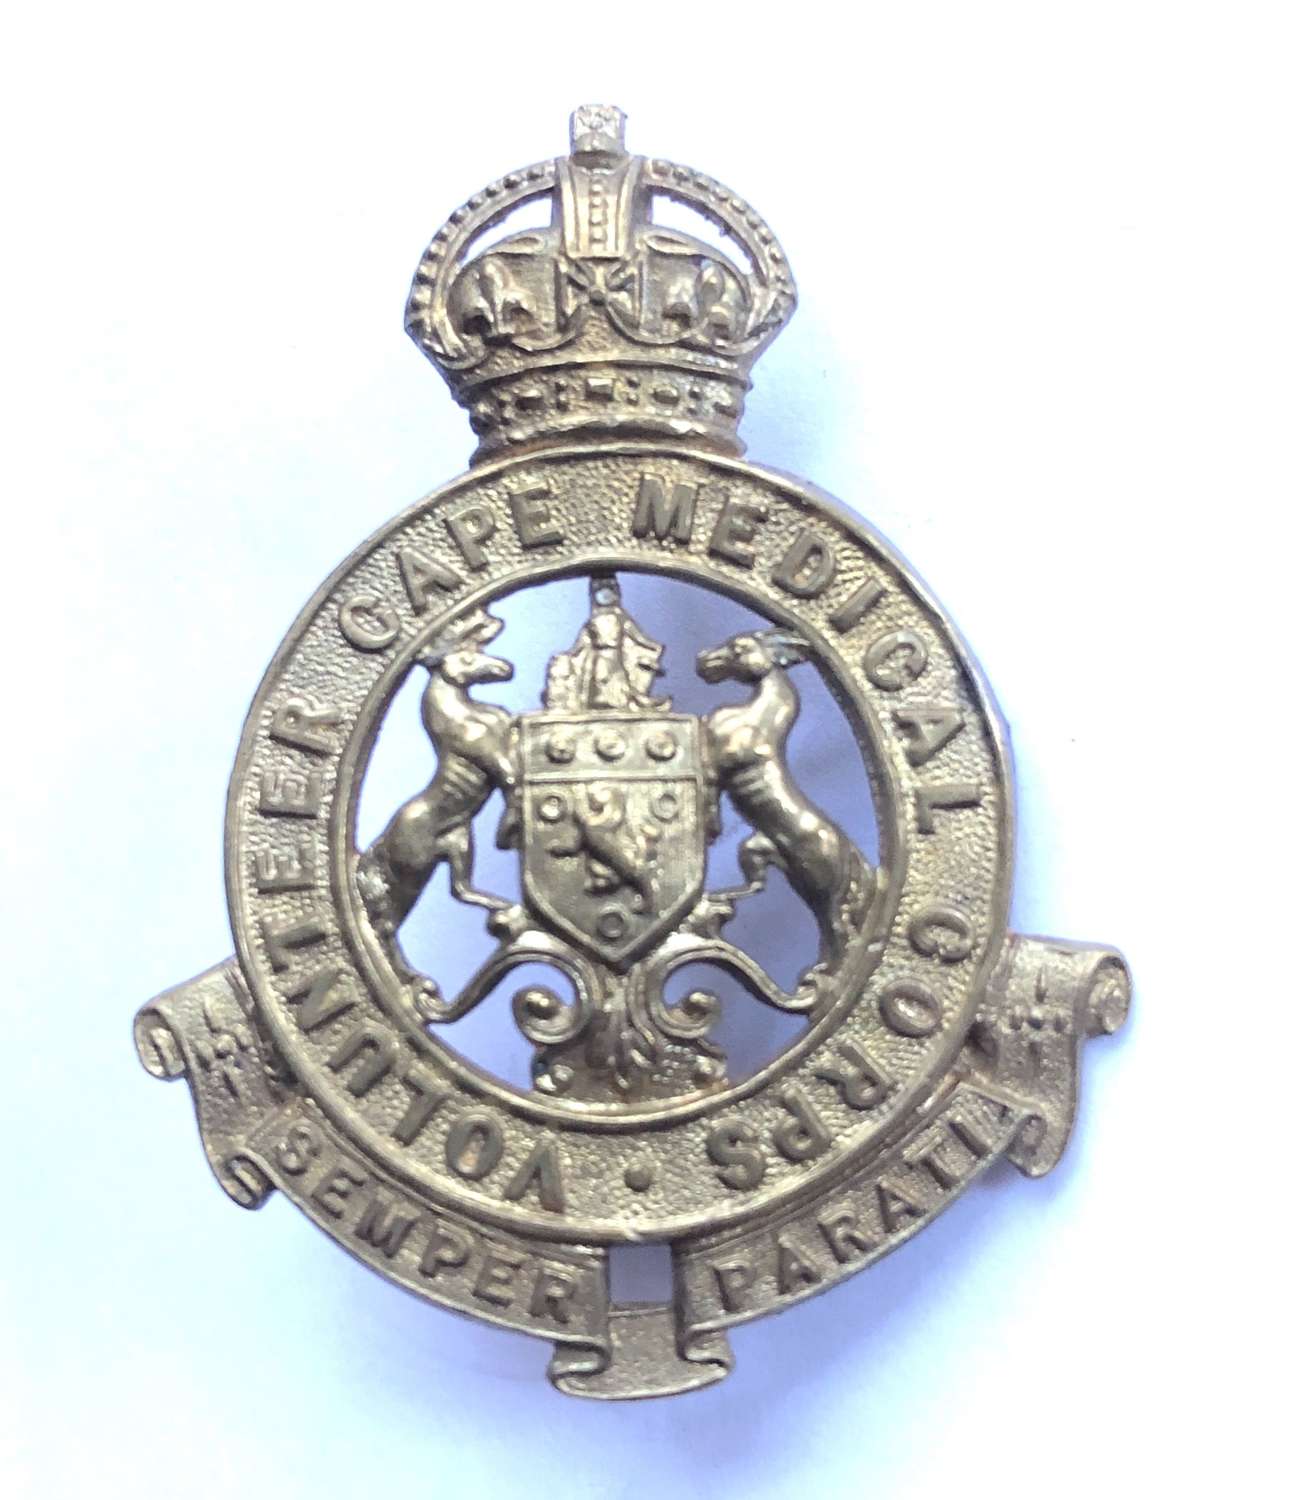 South Africa. Volunteer Cape Medical Corps cap badge c1903-13